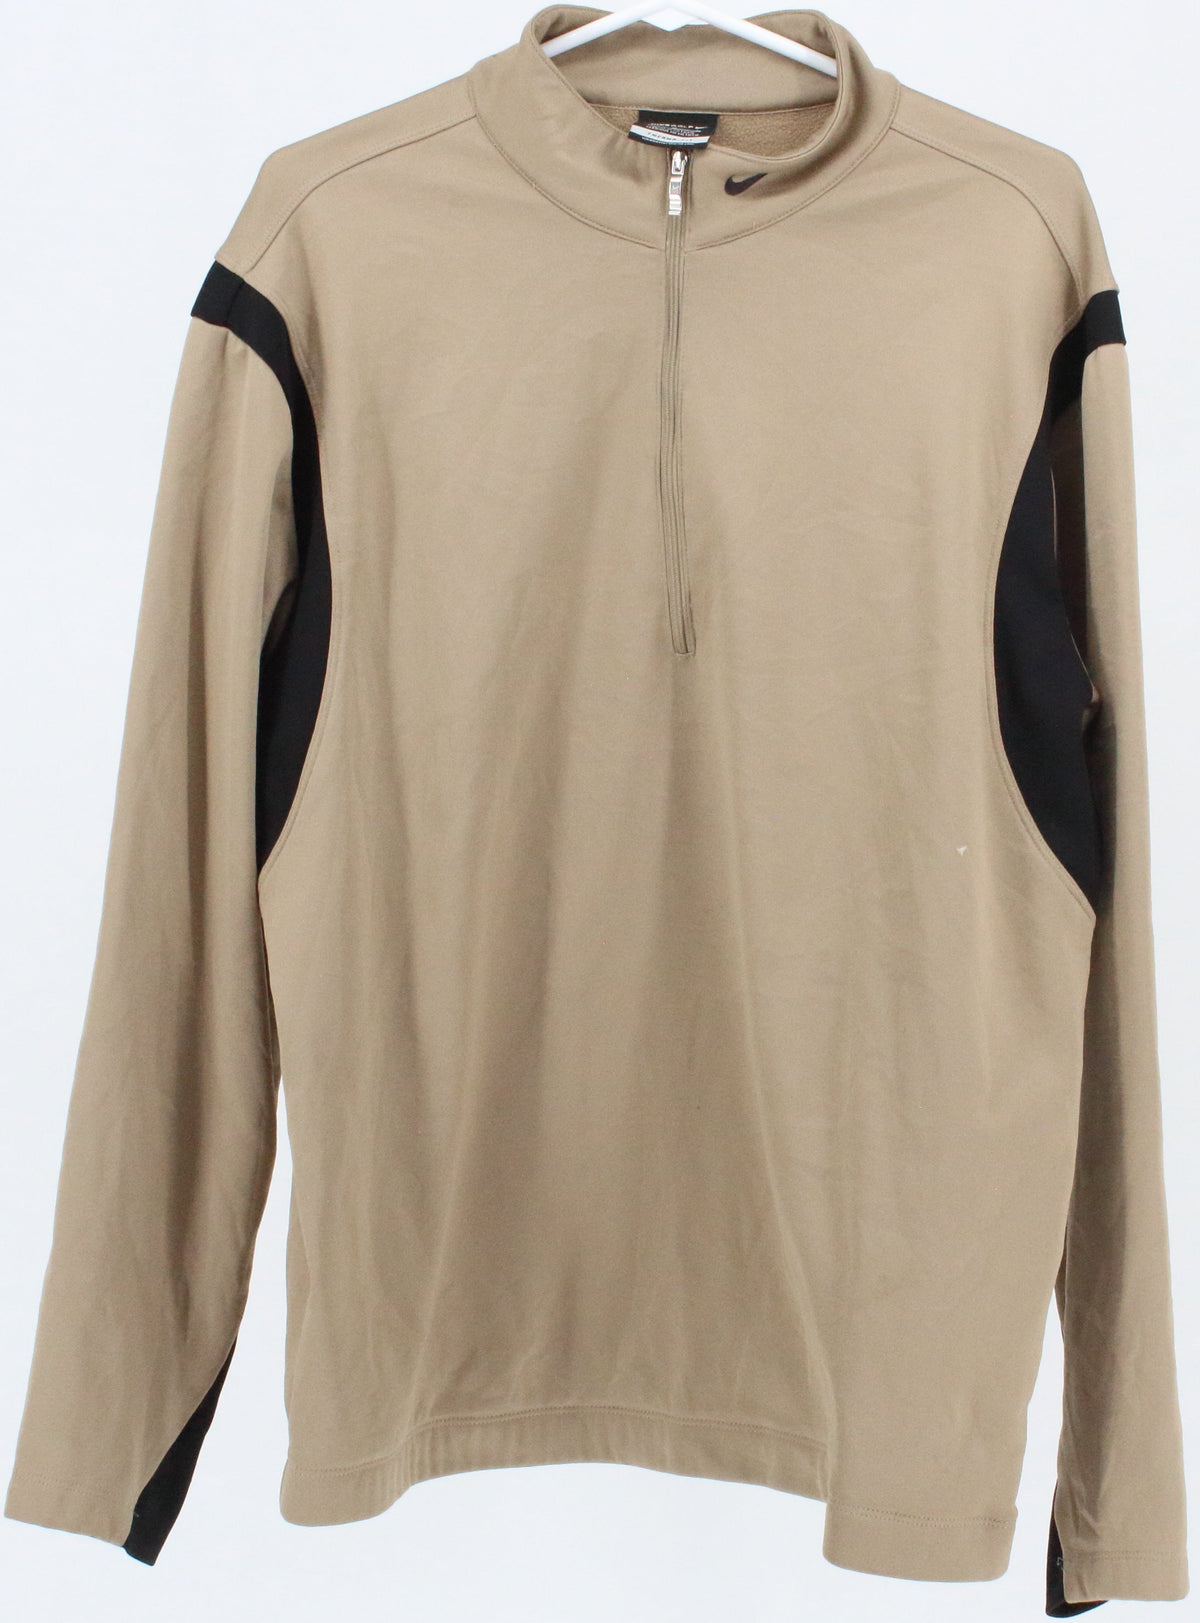 Nike Golf Beige and Black Half Zip Long Sleeve T-Shirt